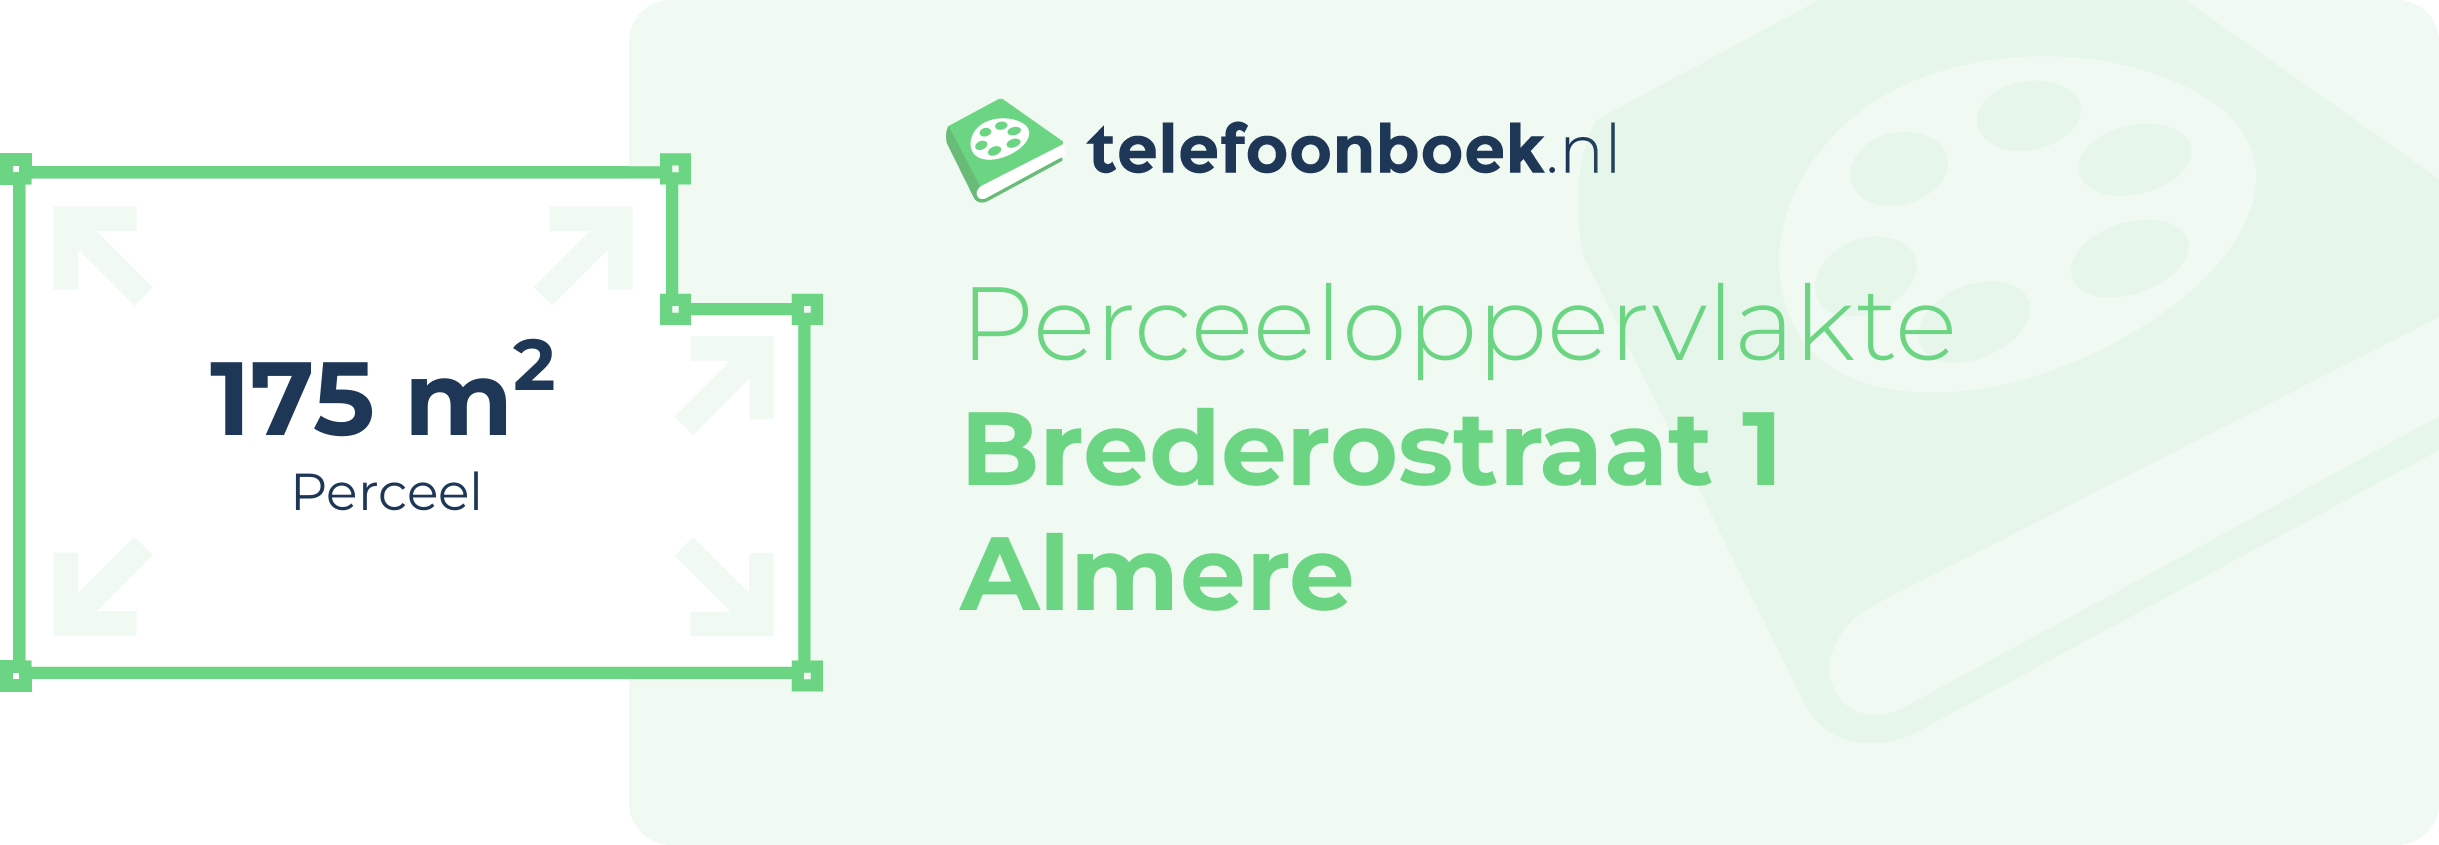 Perceeloppervlakte Brederostraat 1 Almere